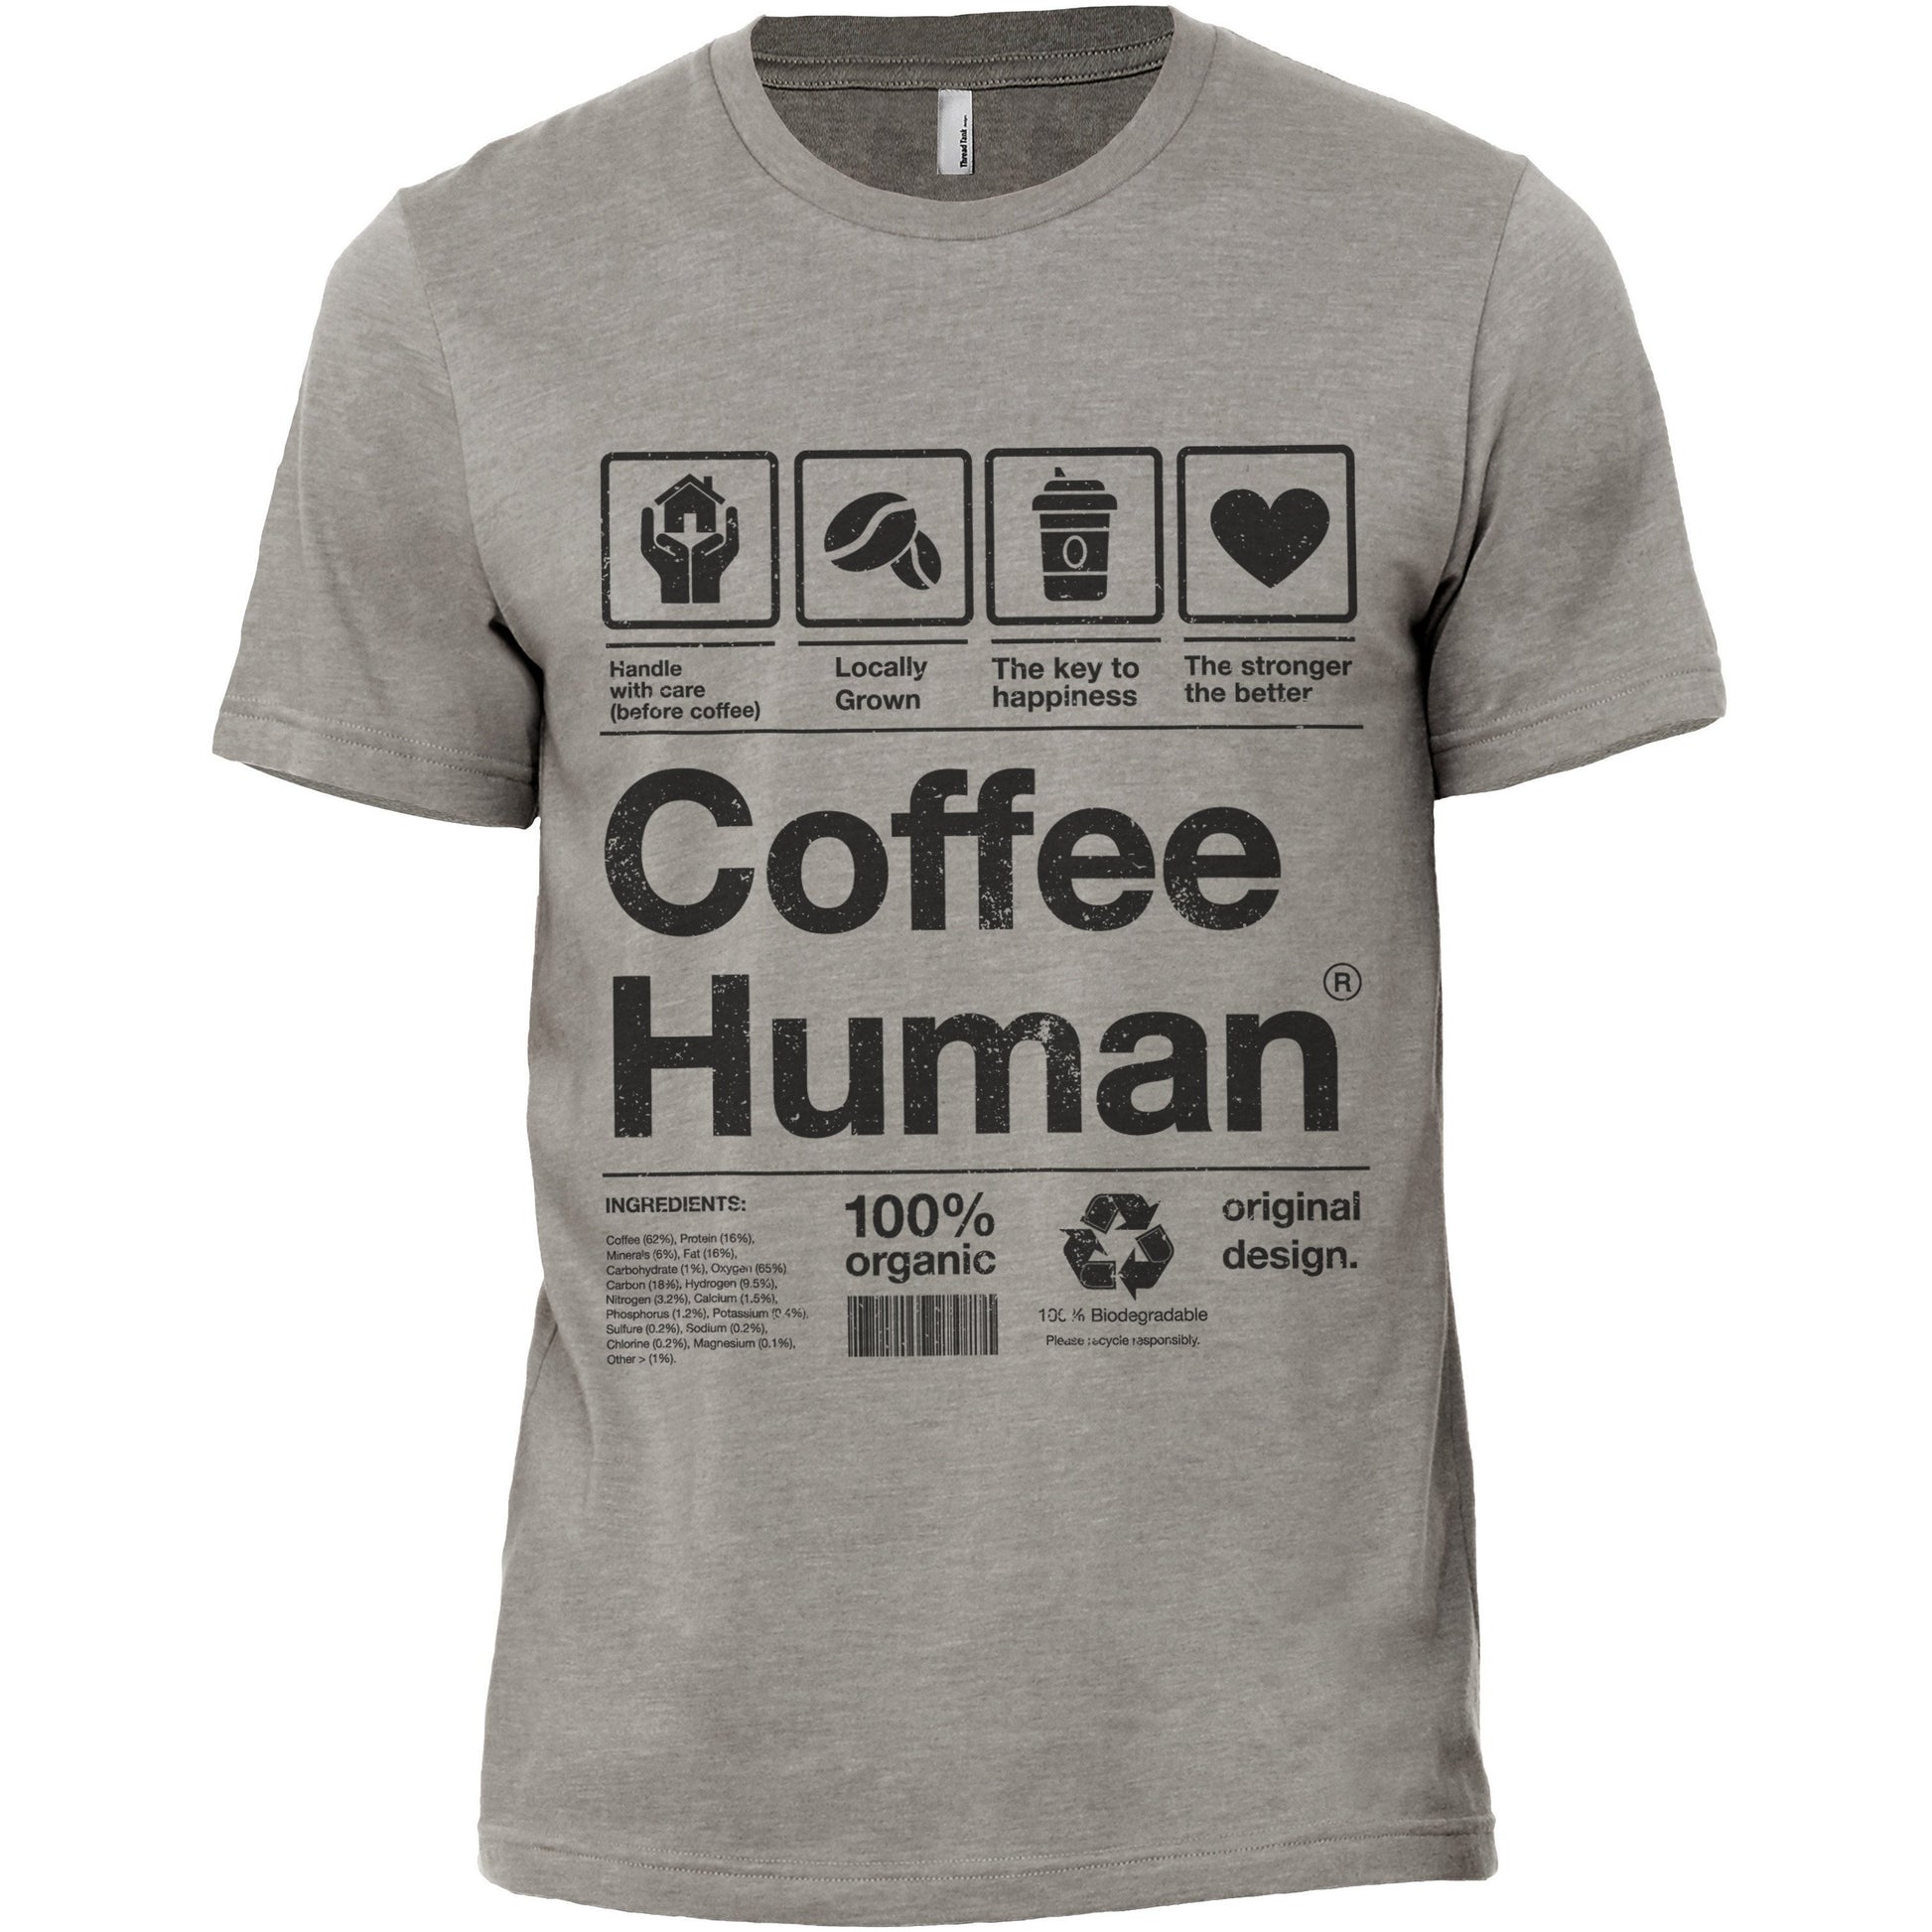 Coffee Human Military Grey Printed Graphic Men's Crew T-Shirt Tee